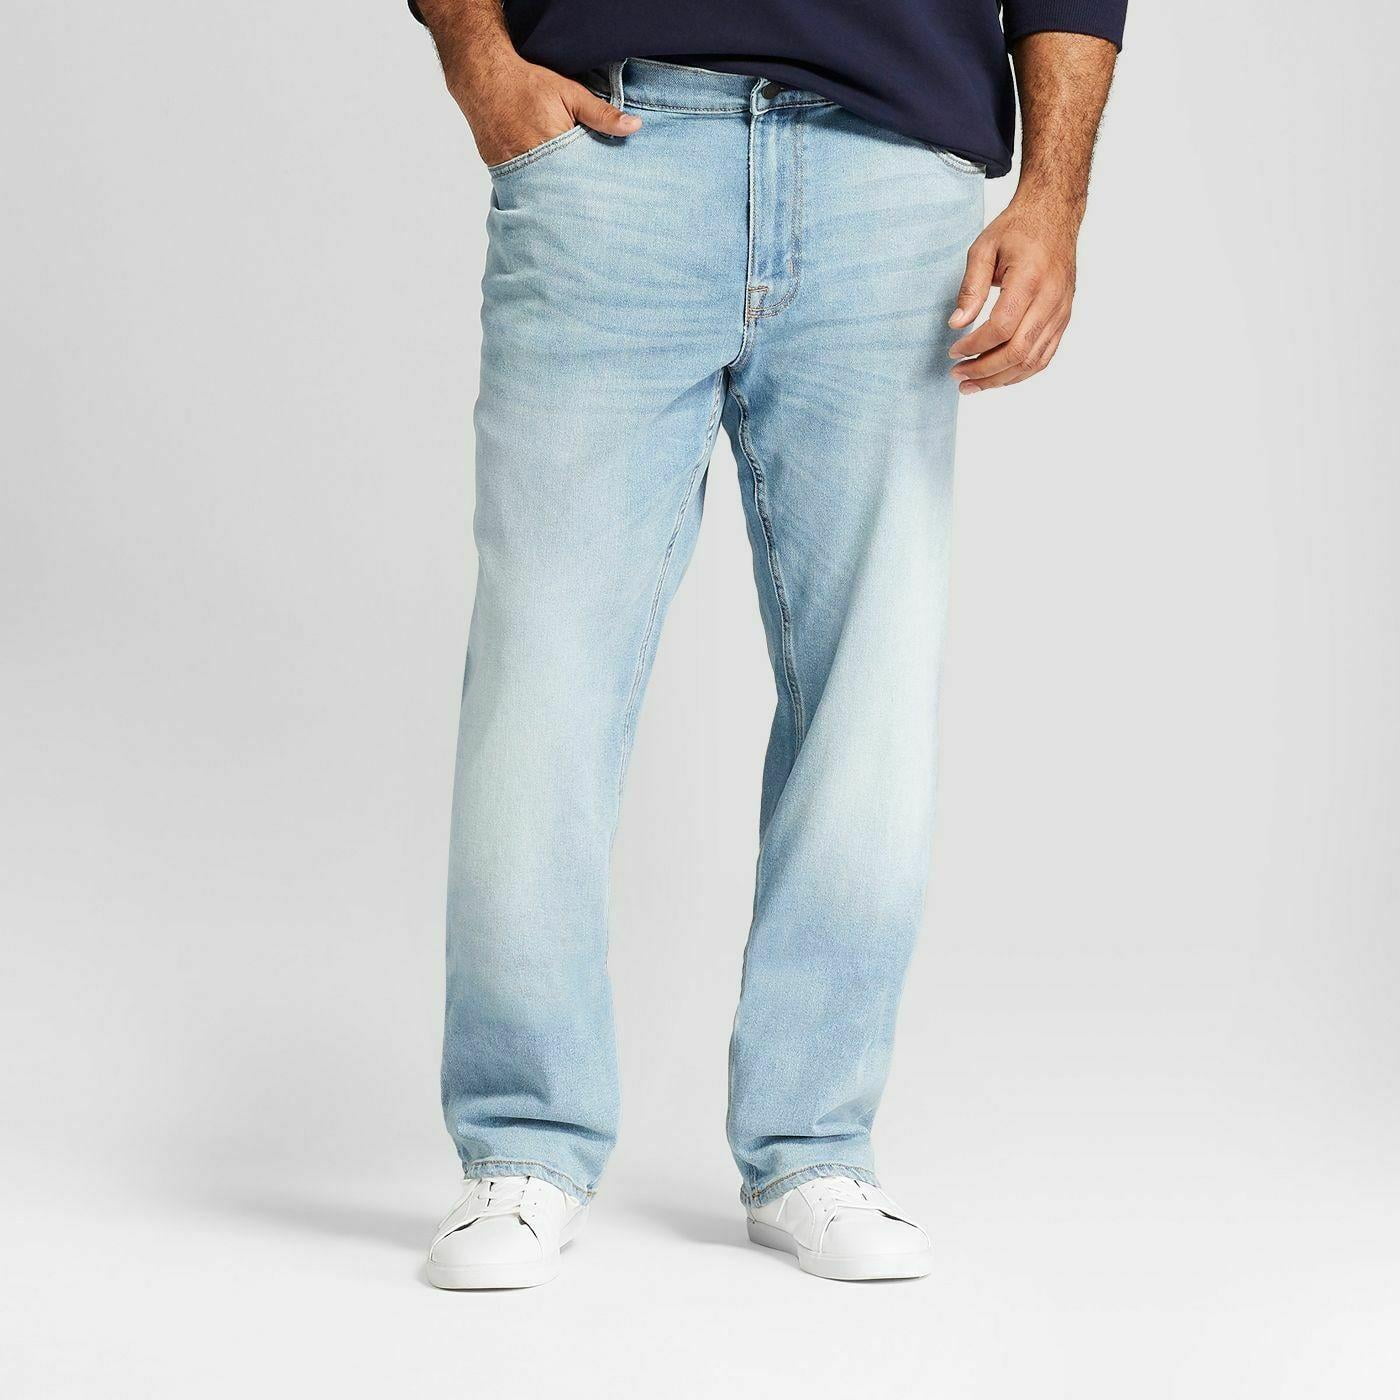 Goodfellow & Co Men's Total Flex Blue Jeans 32x30 Slim Filip Light Wash Straight 